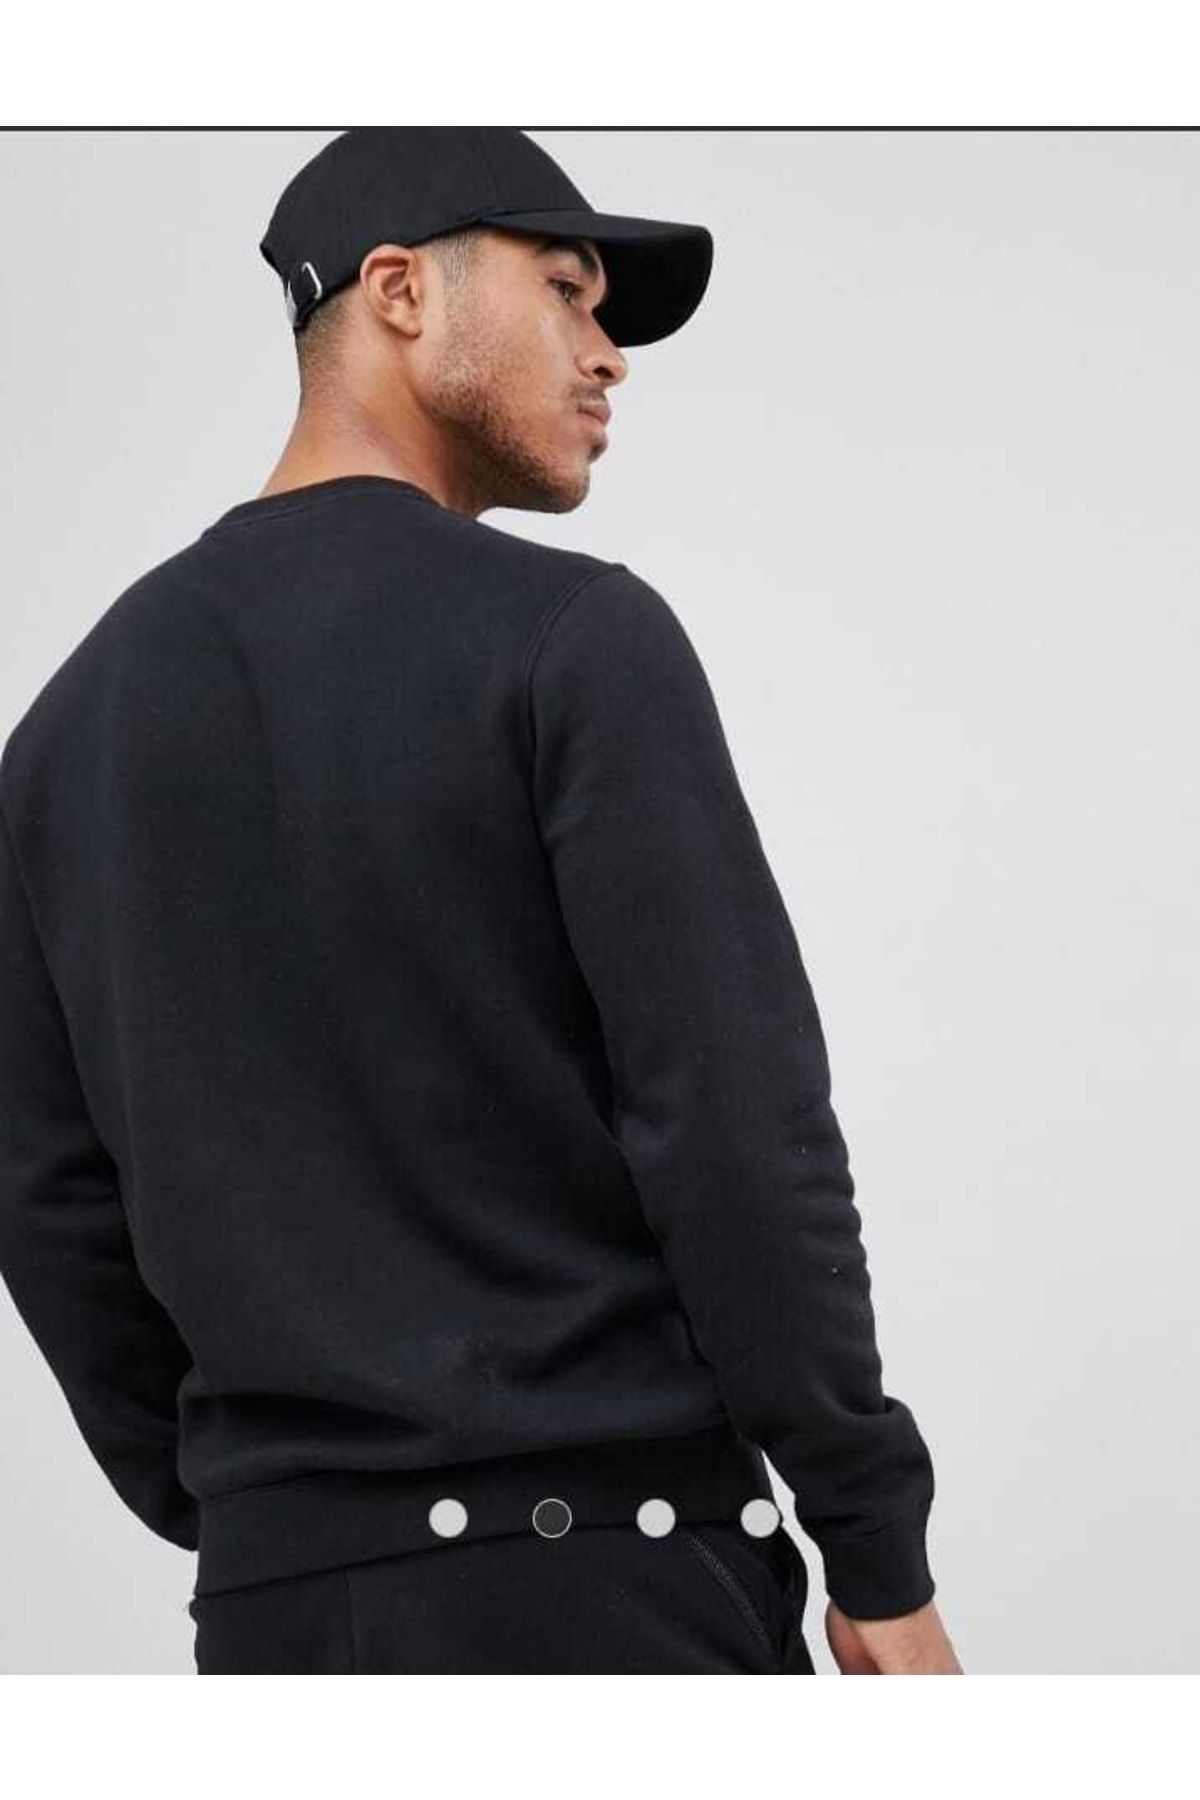 Nike Sportswear Club Fleece Men's Crewneck Sweatshirt, Black, M REGULAR US  at  Men's Clothing store